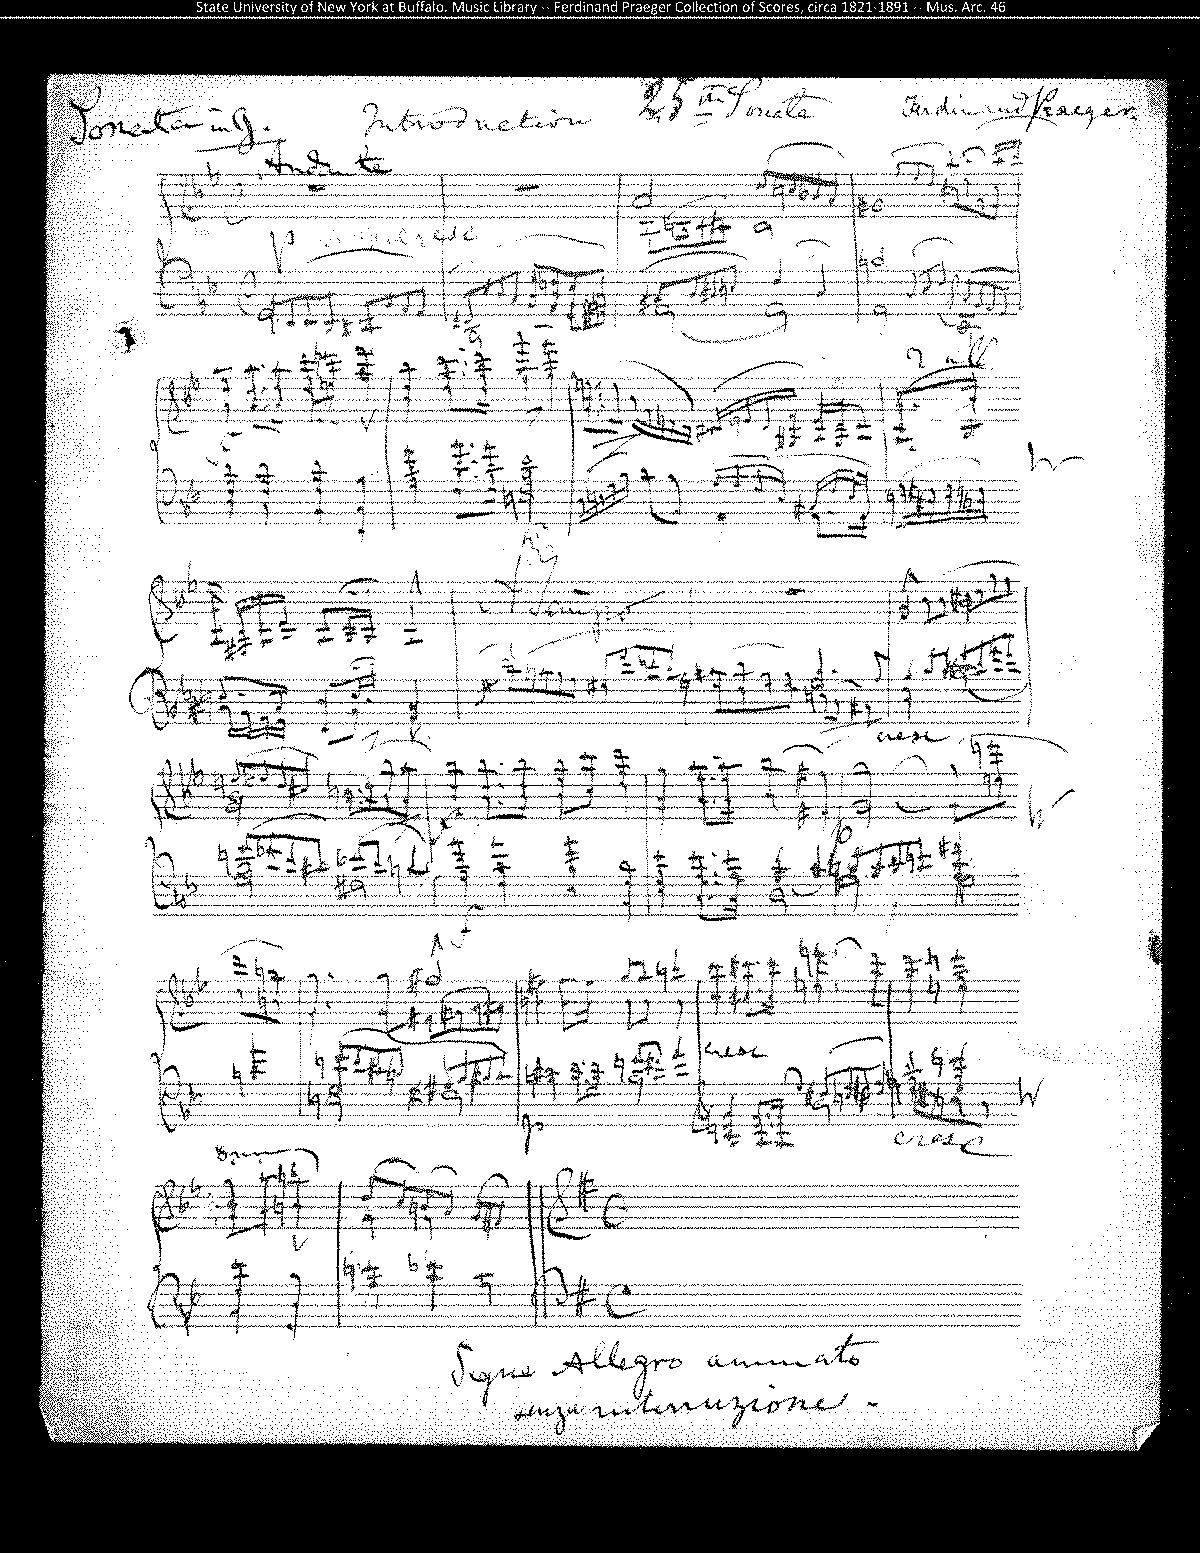 Piano Sonata No.25 in G major (Praeger, Ferdinand) - IMSLP